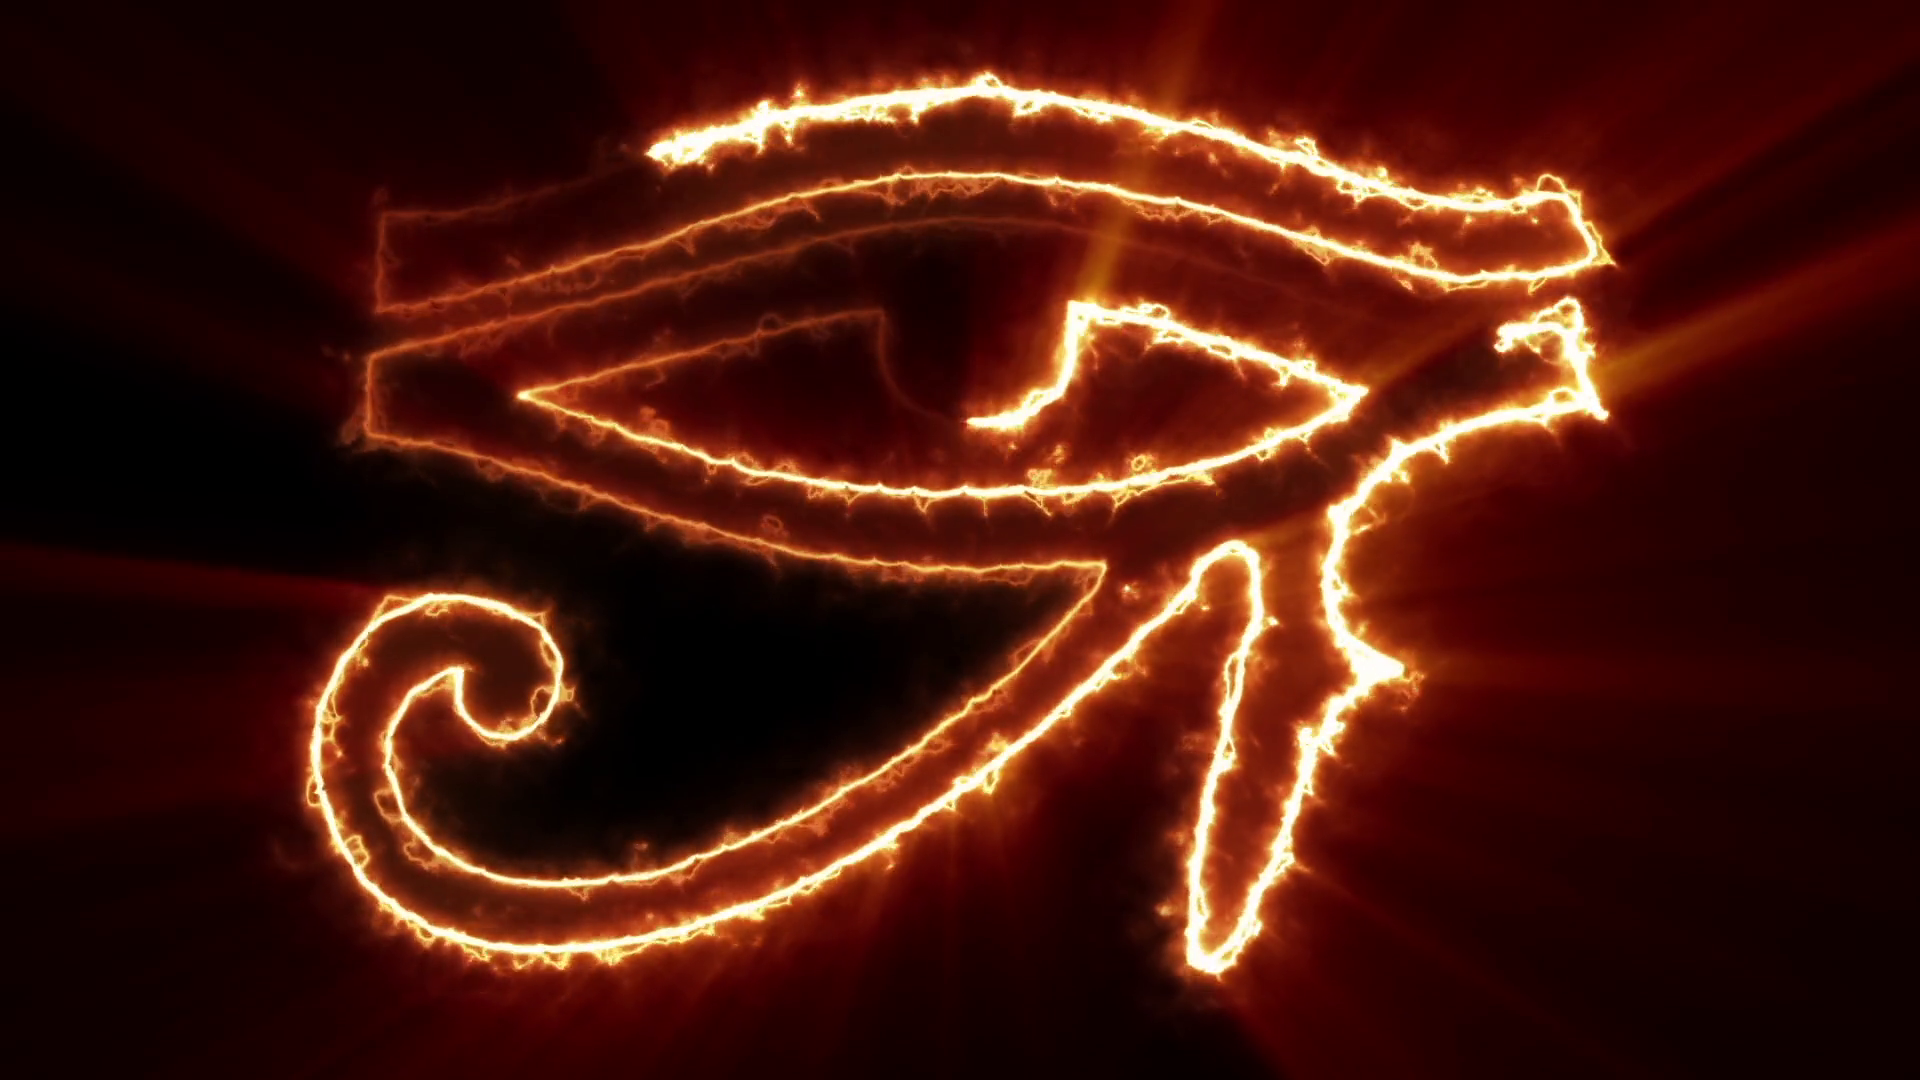 Eye Of Horus Wallpapers